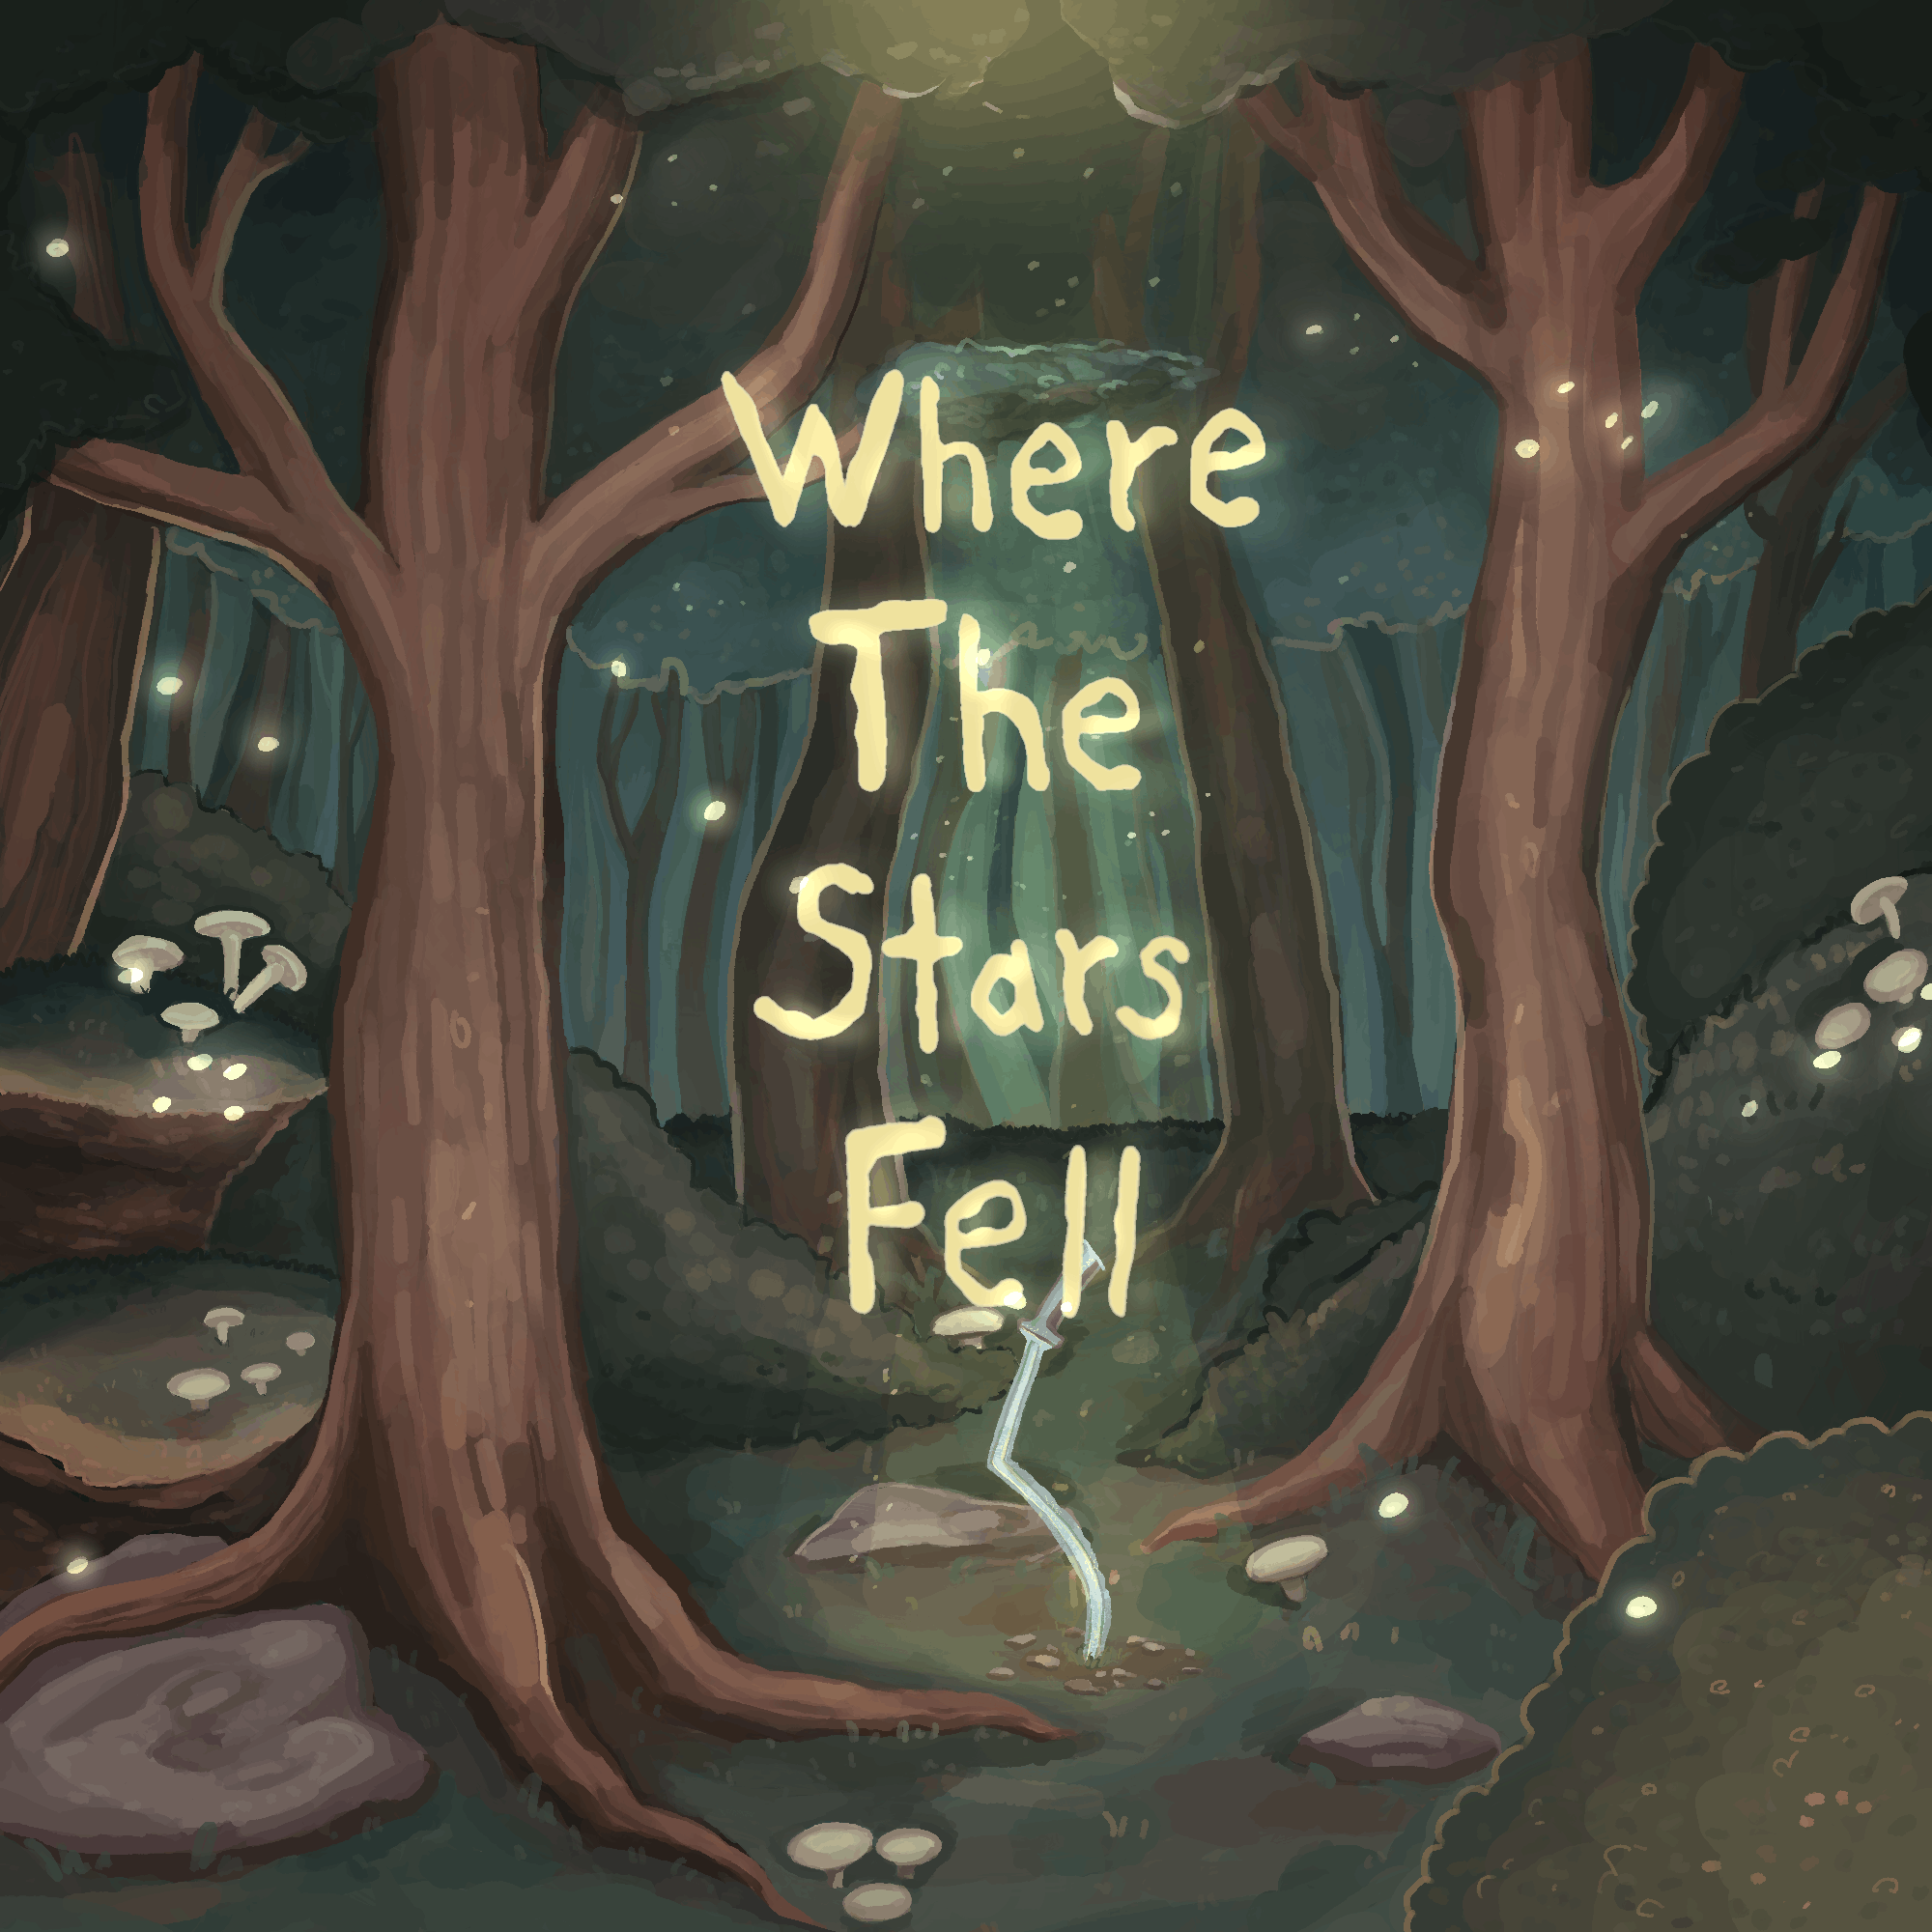 Presenting: Where the Stars Fell